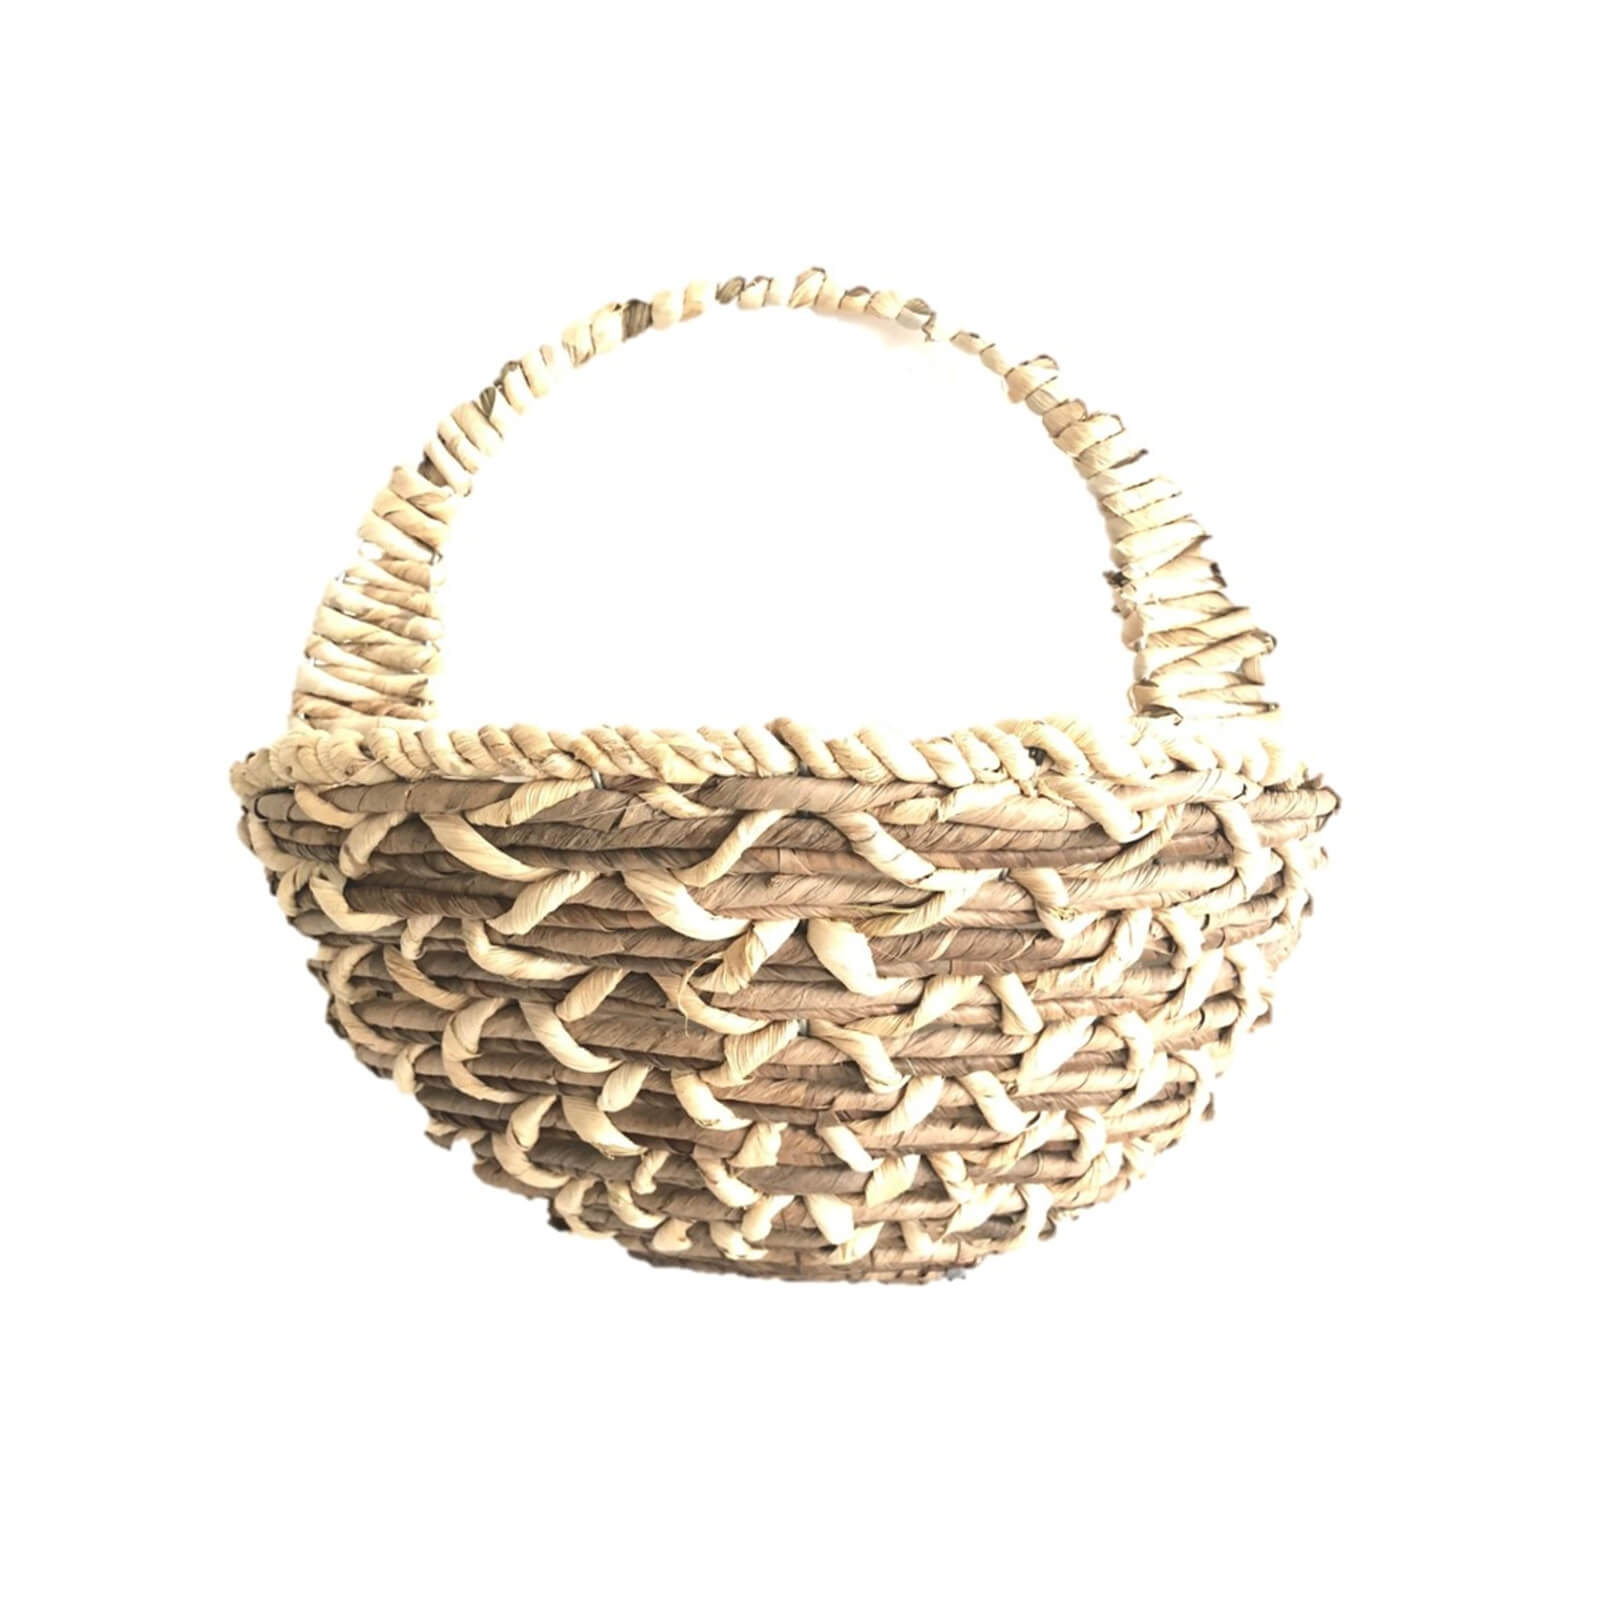 Wall Basket - 40cm